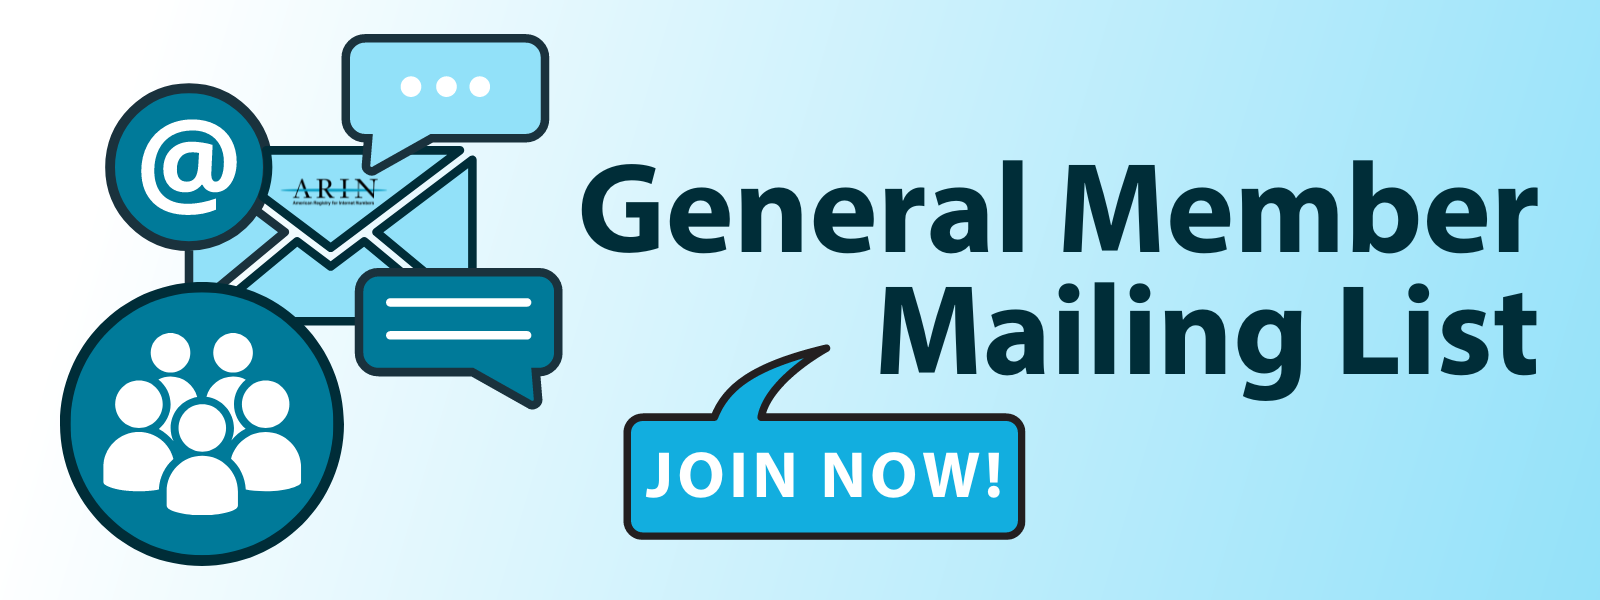 General Member Mailing List